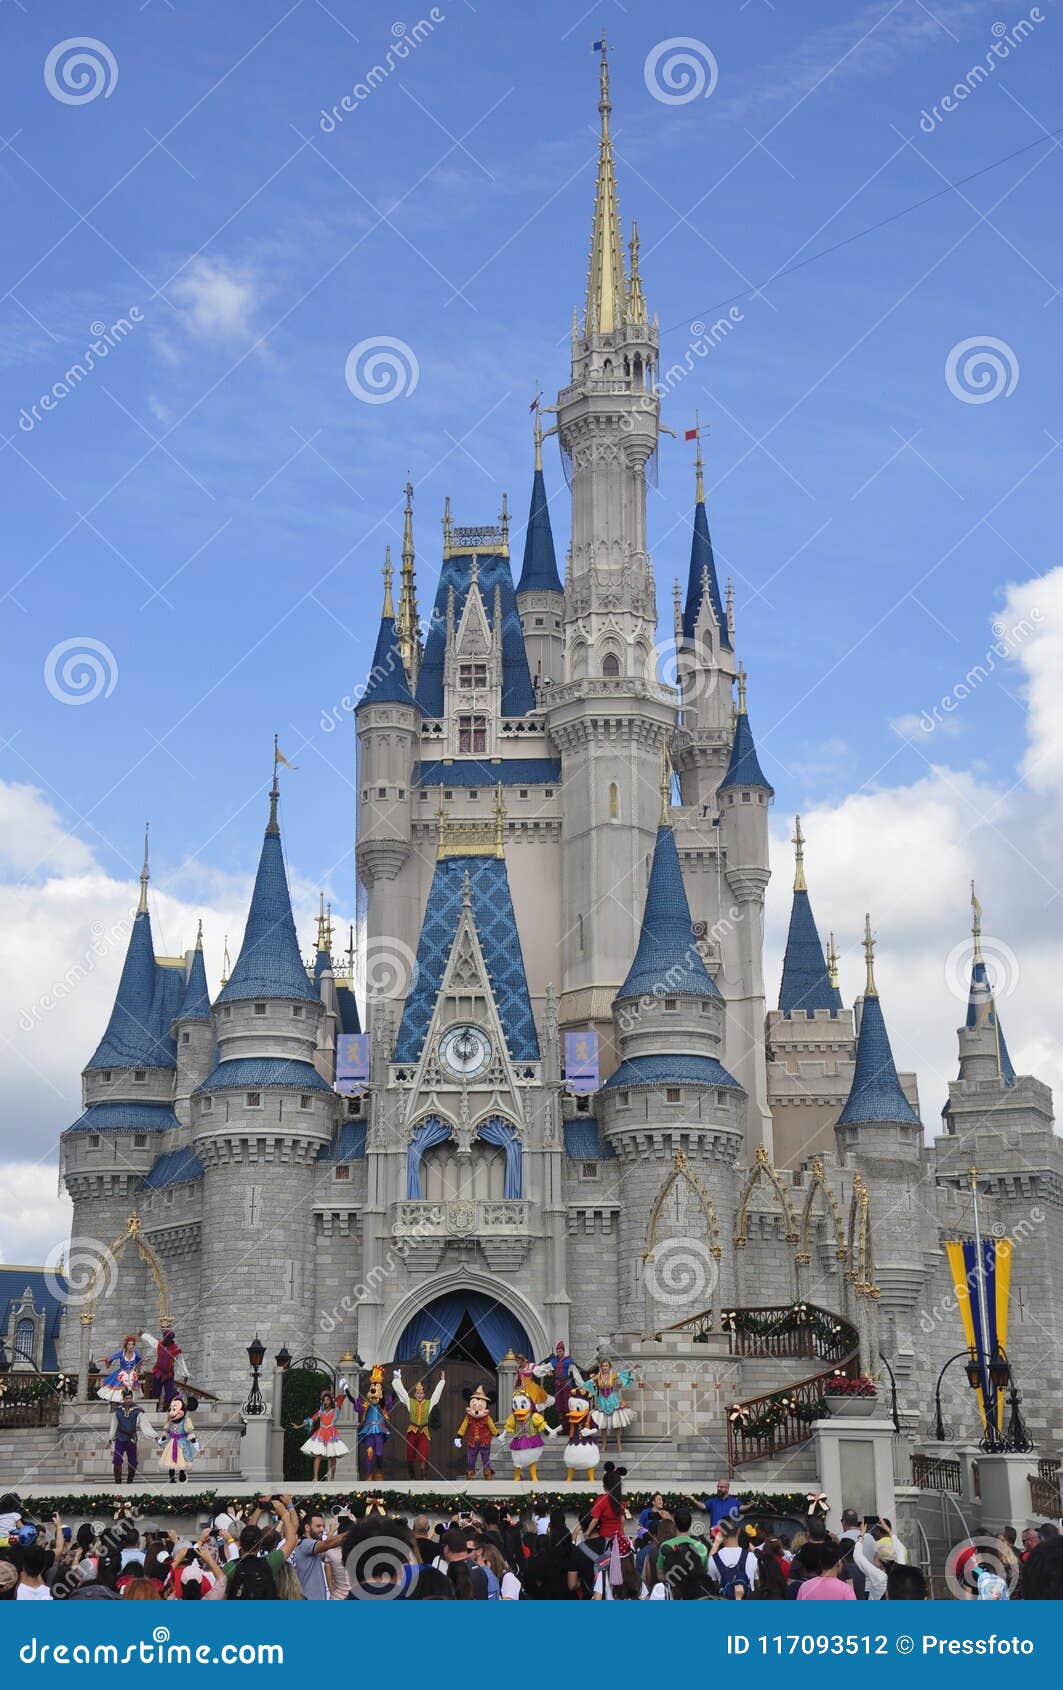 Cinderella Castle At Magic Kingdom Park Walt Disney World Resort Orlando Florida Usa Editorial Photography Image Of Attractions Magic